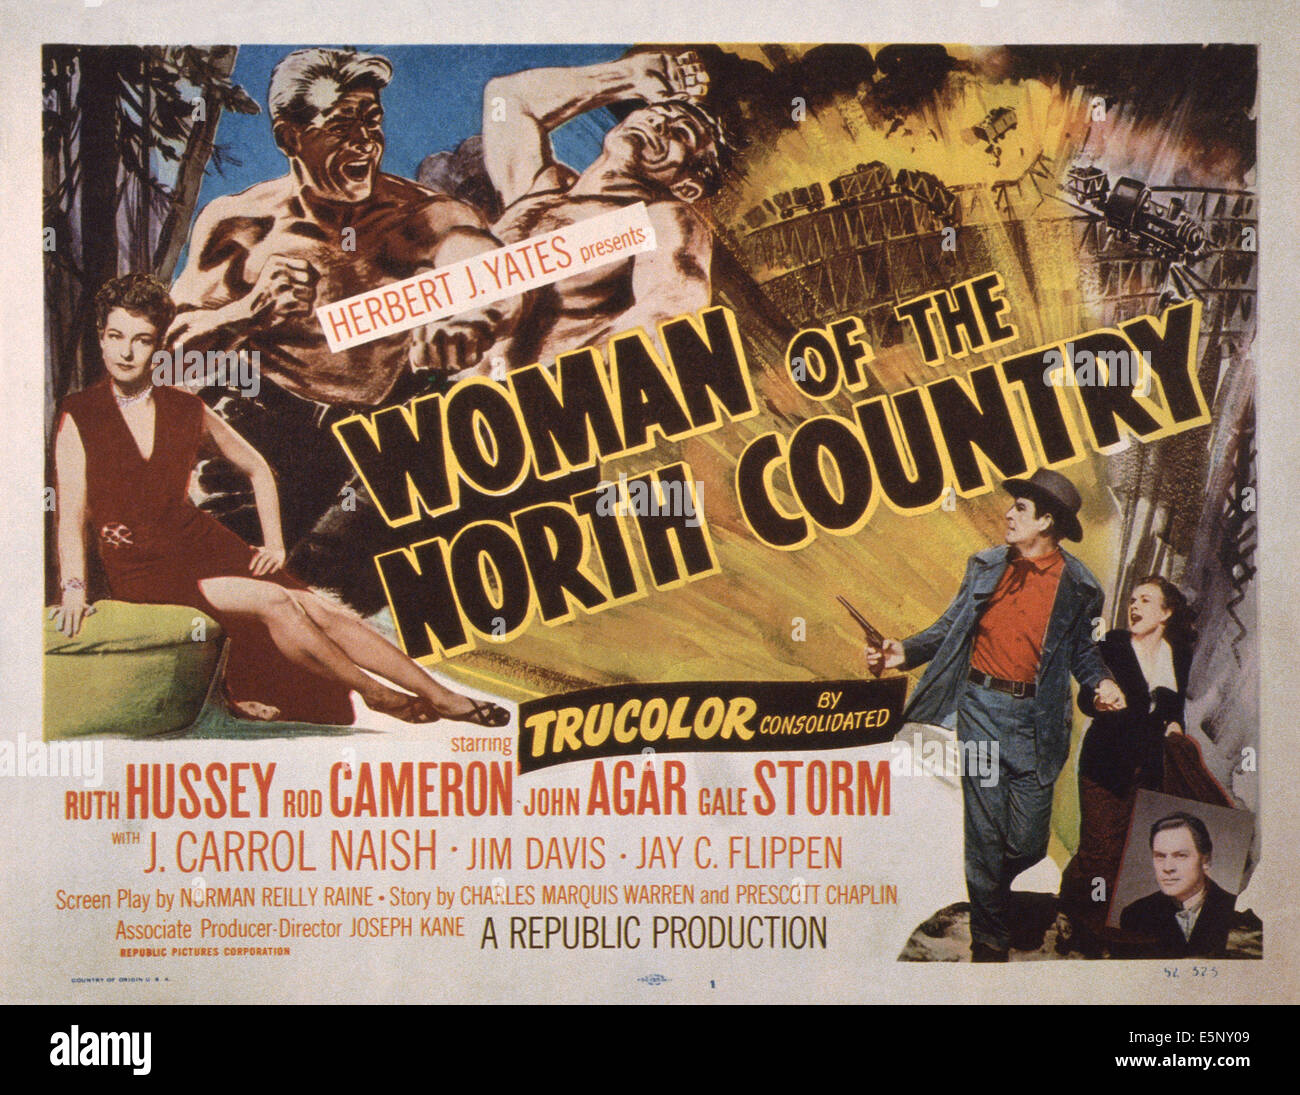 Donna del paese del nord, noi lobbycard, estrema sinistra: Ruth Hussey; in basso a destra: Rod Cameron, Gale Storm, John Agar, 1952 Foto Stock